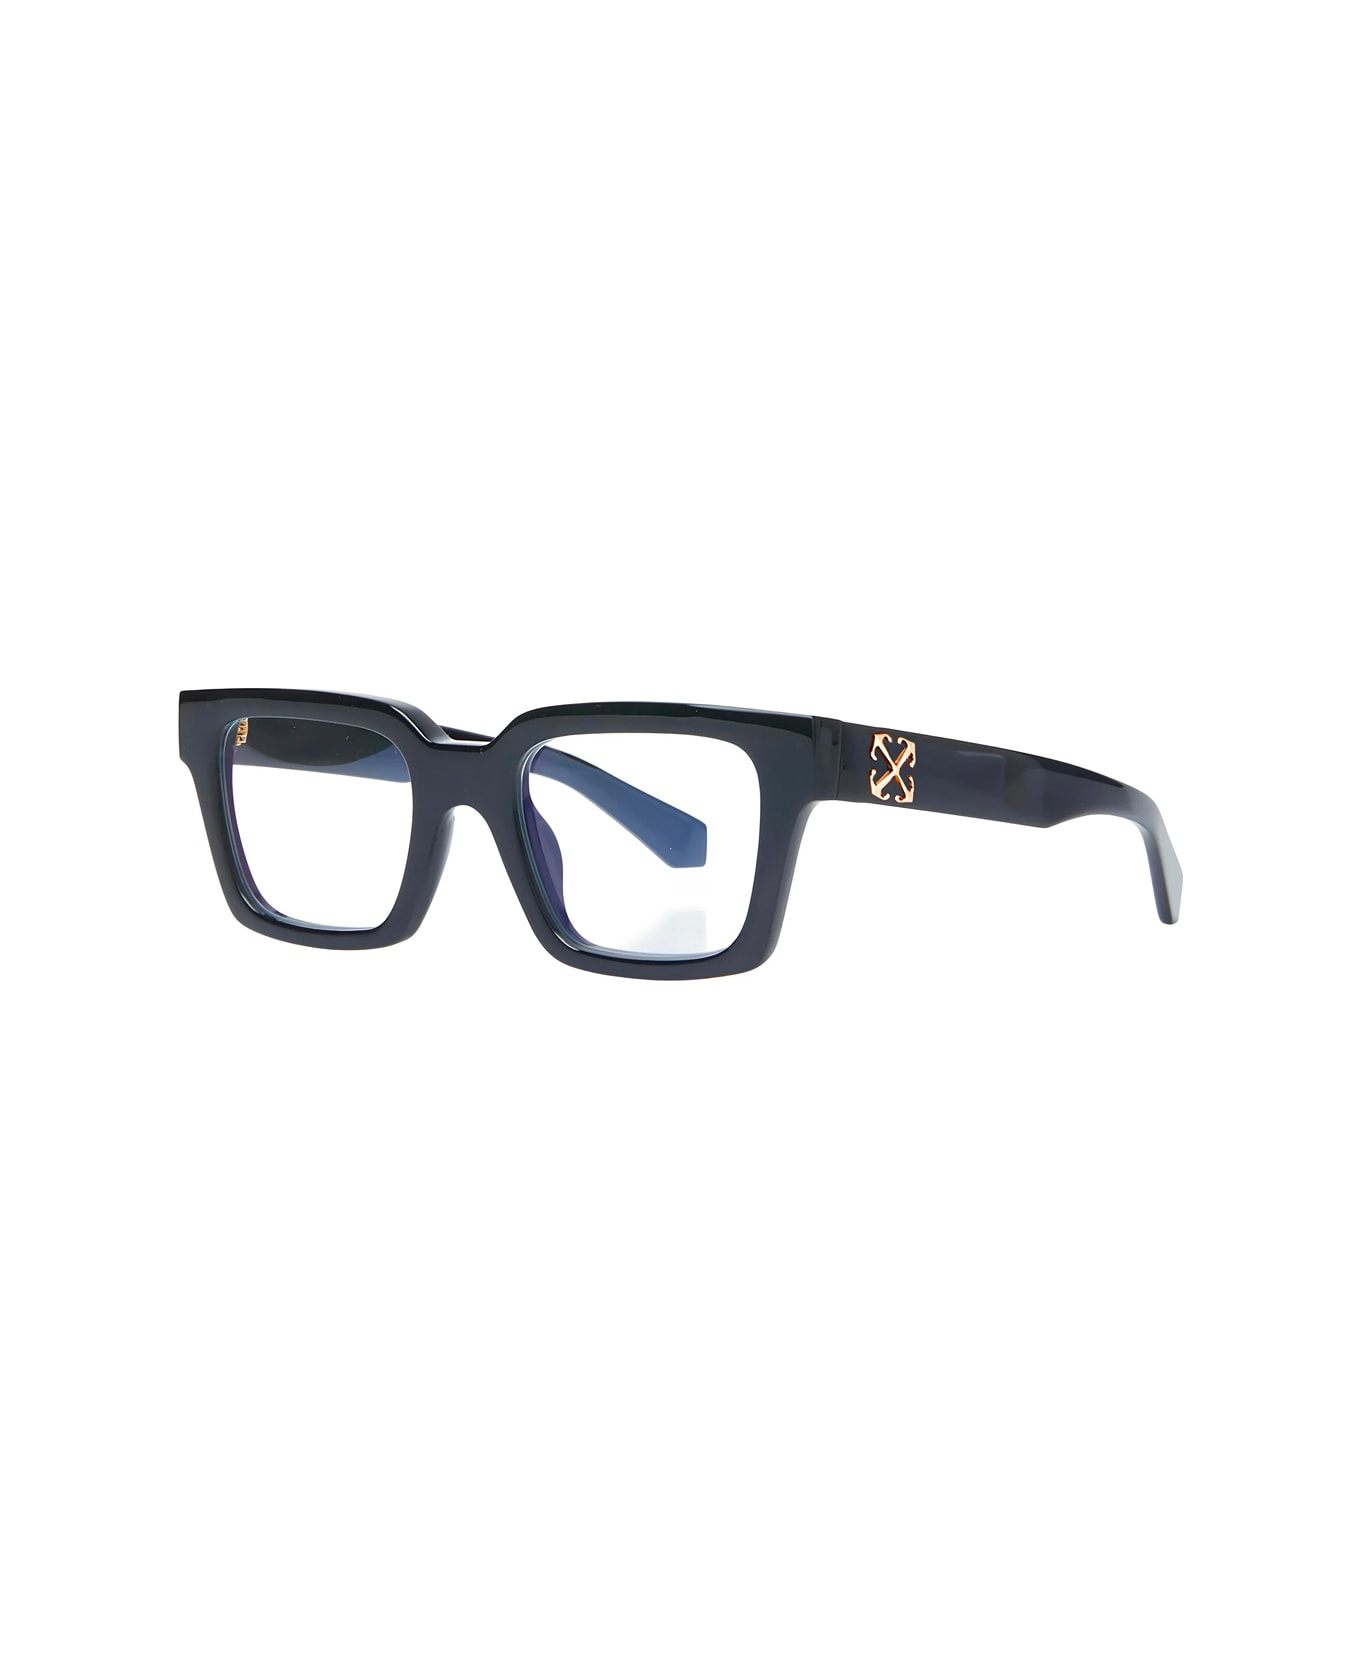 Off-White Off White Oerj072 Style 72 1000 Black Glasses - Nero